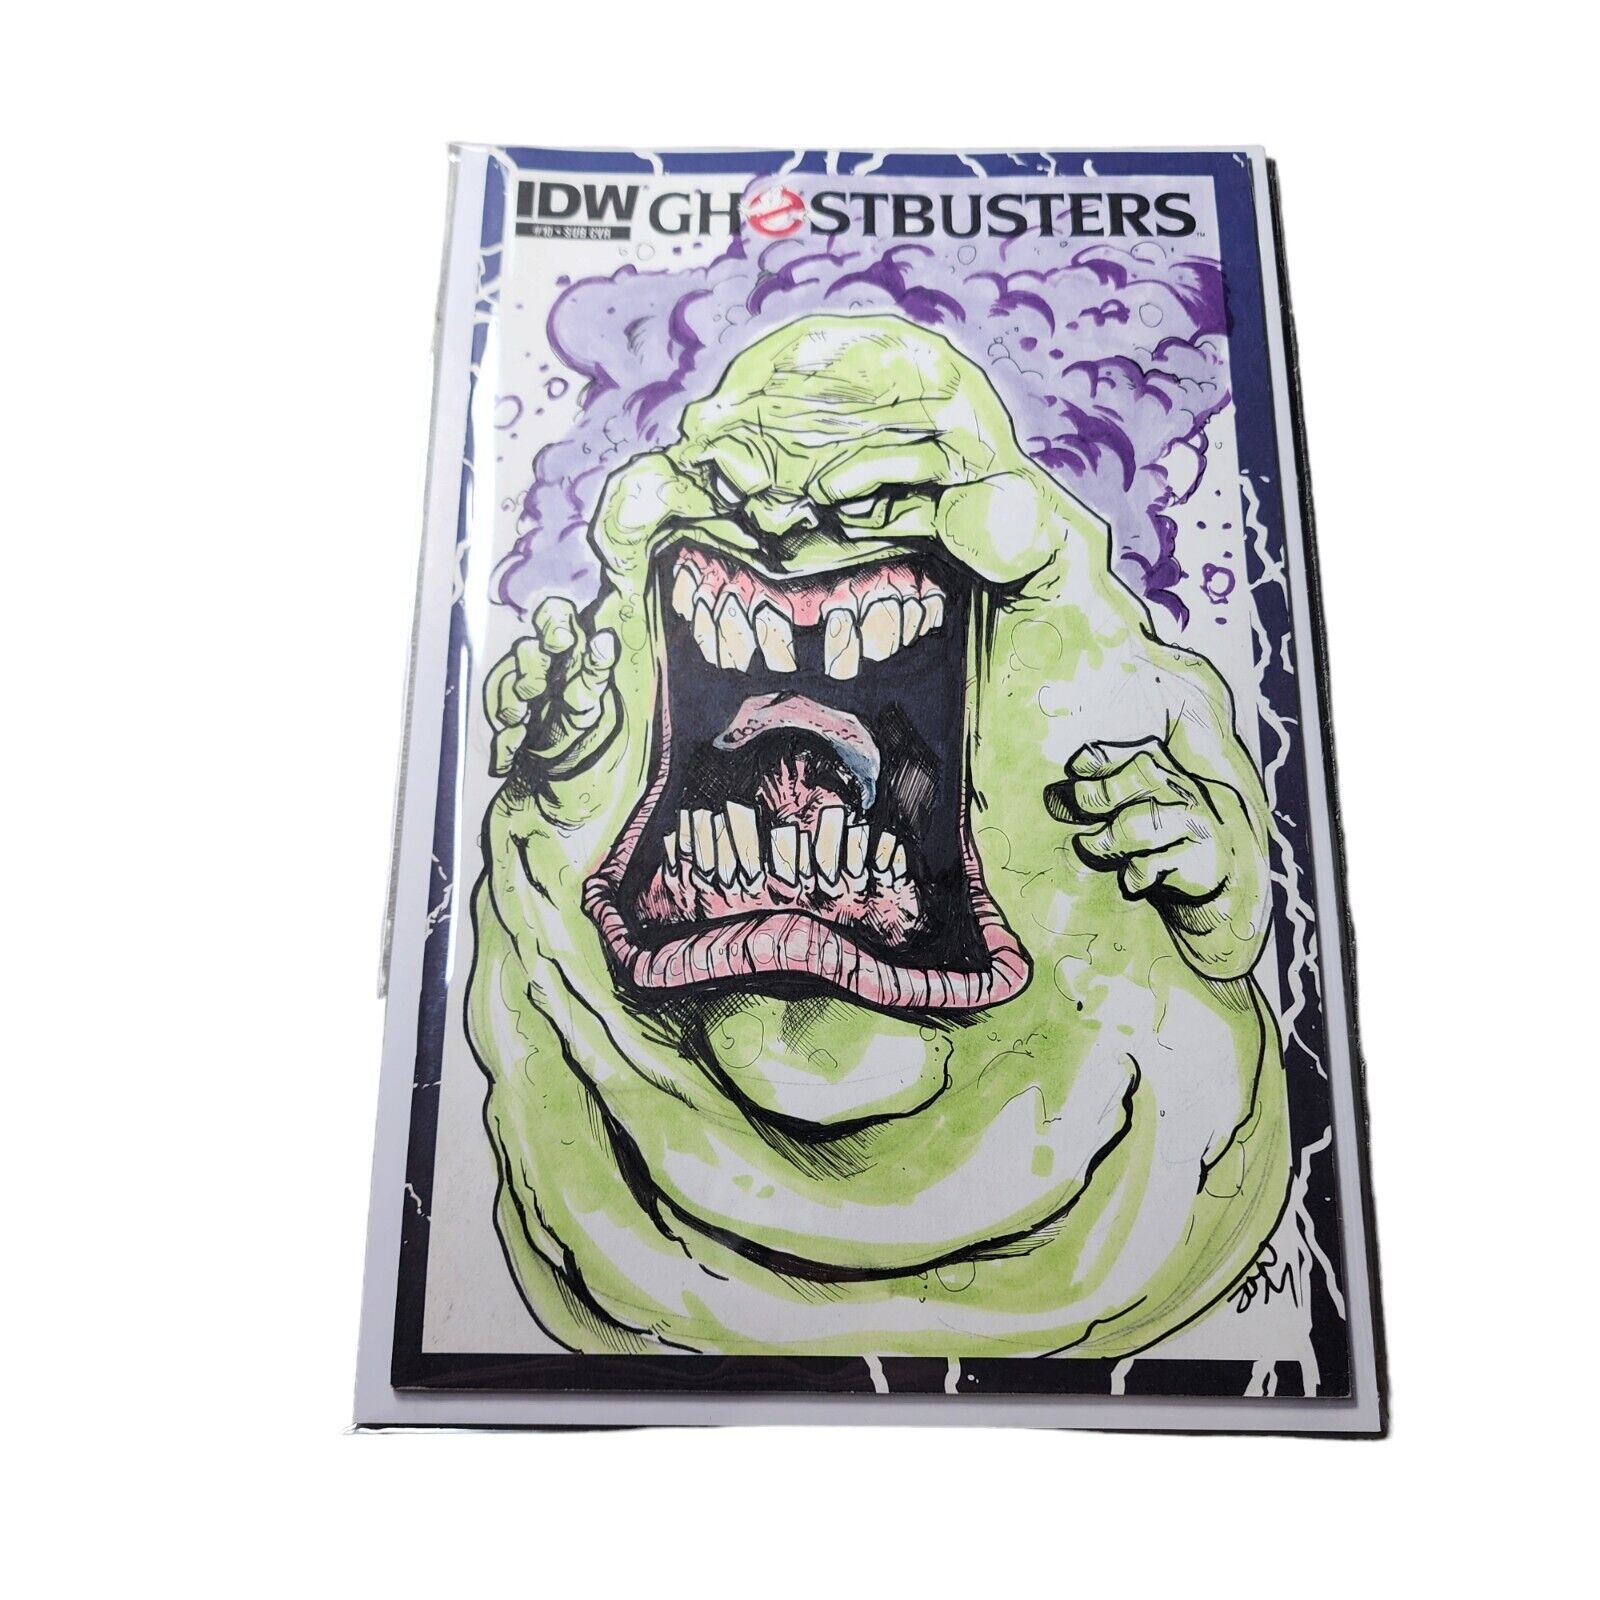 Ghostbusters #10 (2013) IDW Sketch Cvr FULL COLOR Slimer Orig Art JOHN MARROQUIN